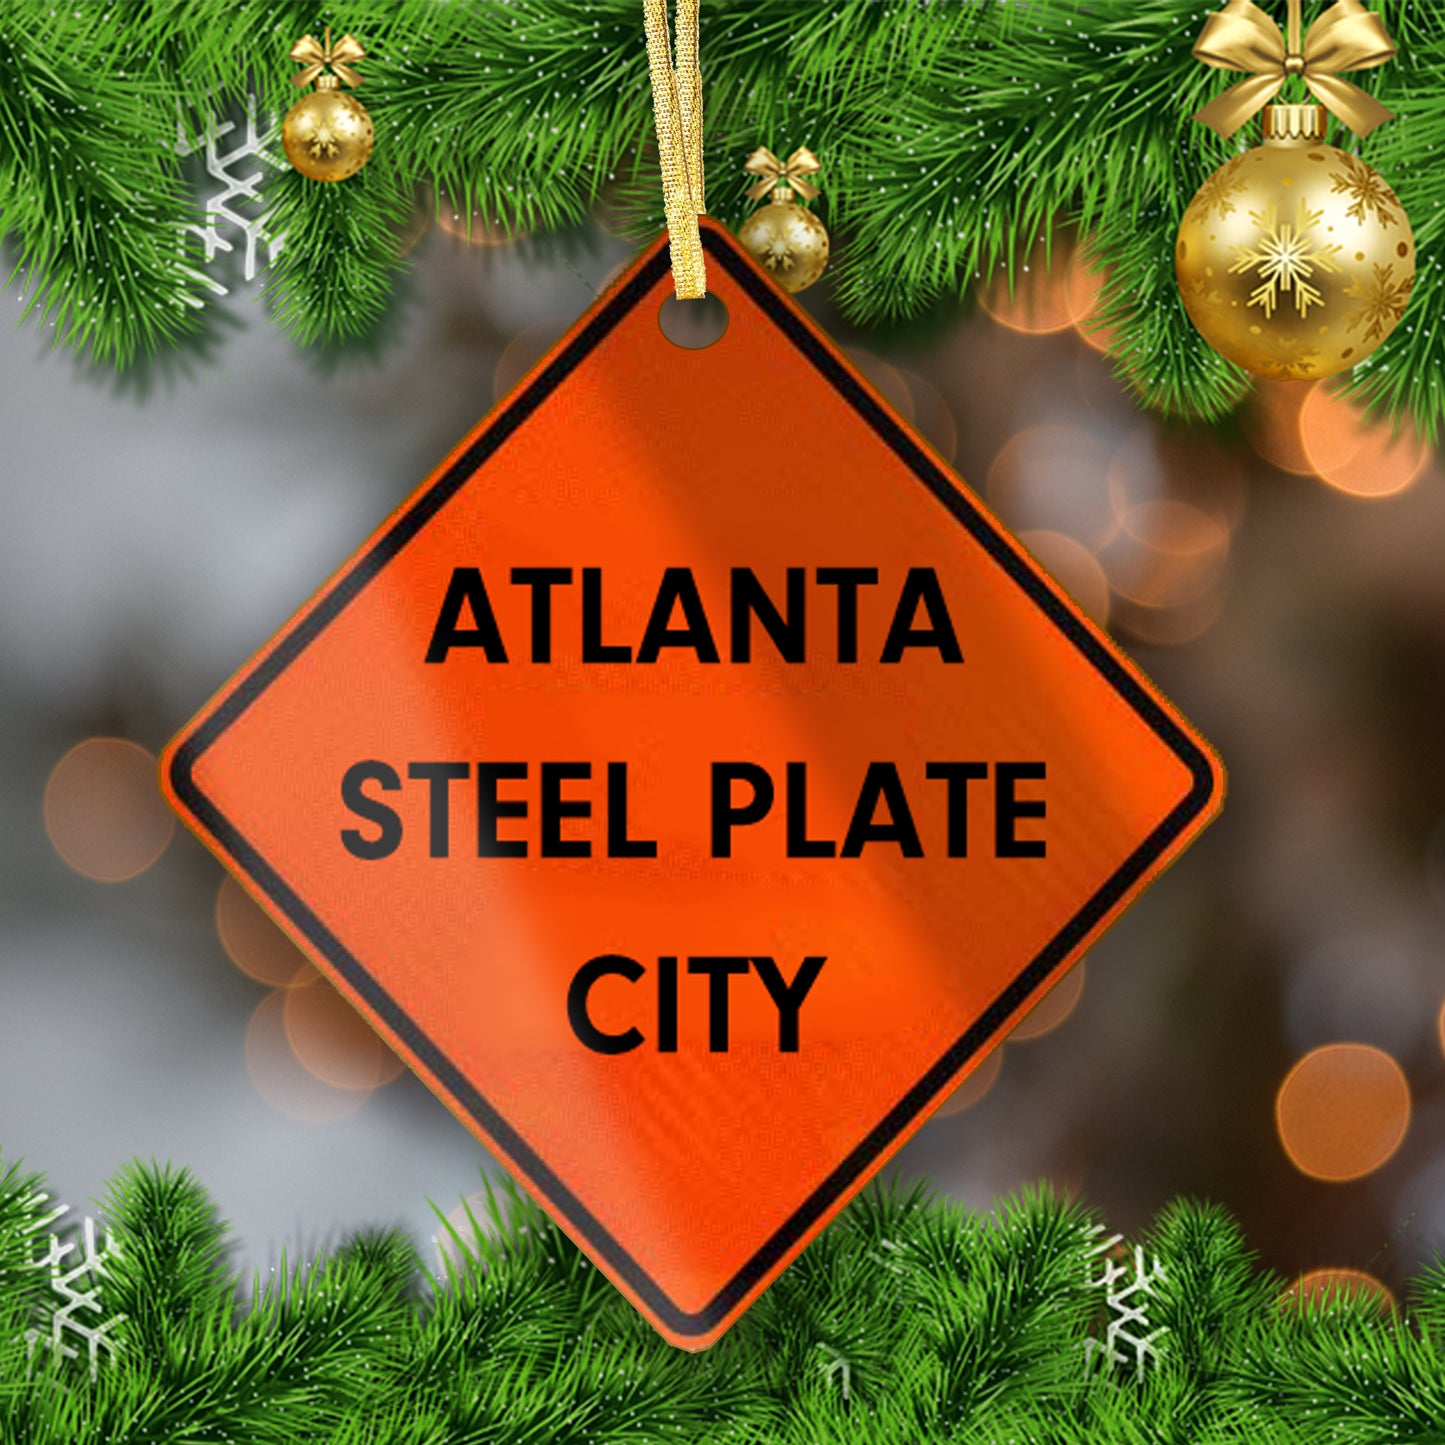 ÄTL Acrylic Steel Plate Street Sign Ornament